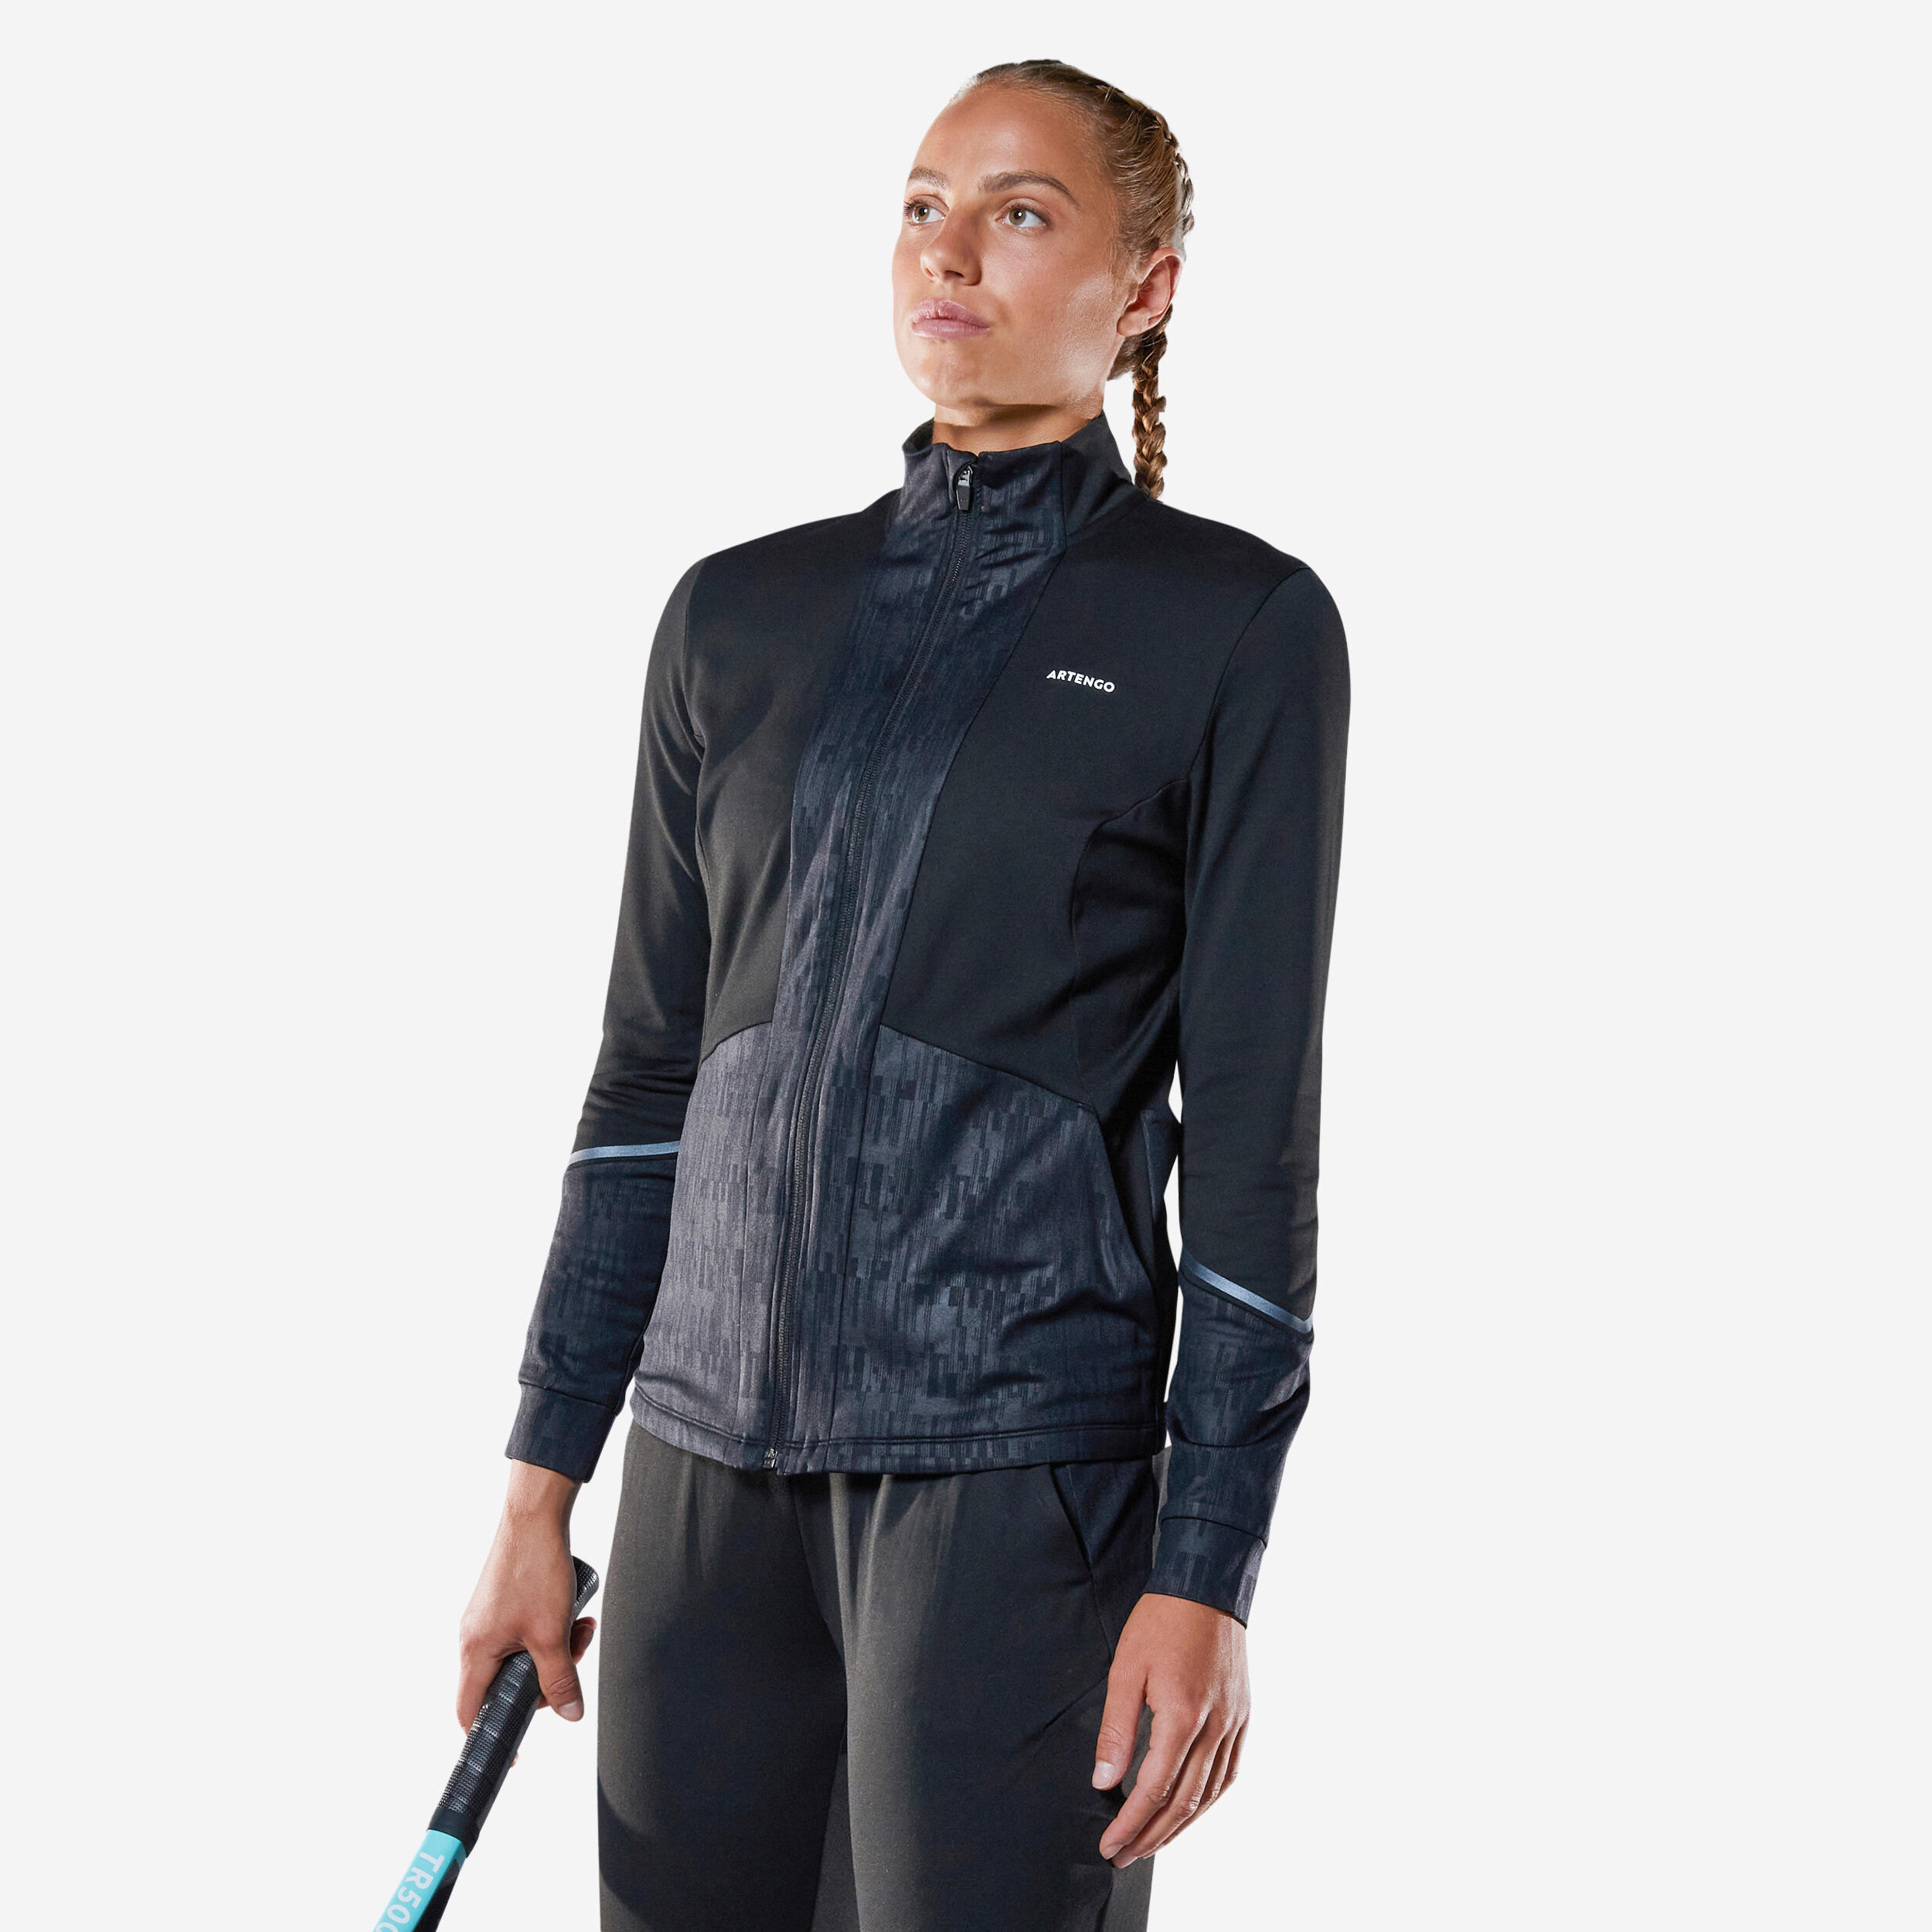 ARTENGO Women's Dry Thermal Tennis Jacket TH500 - Black